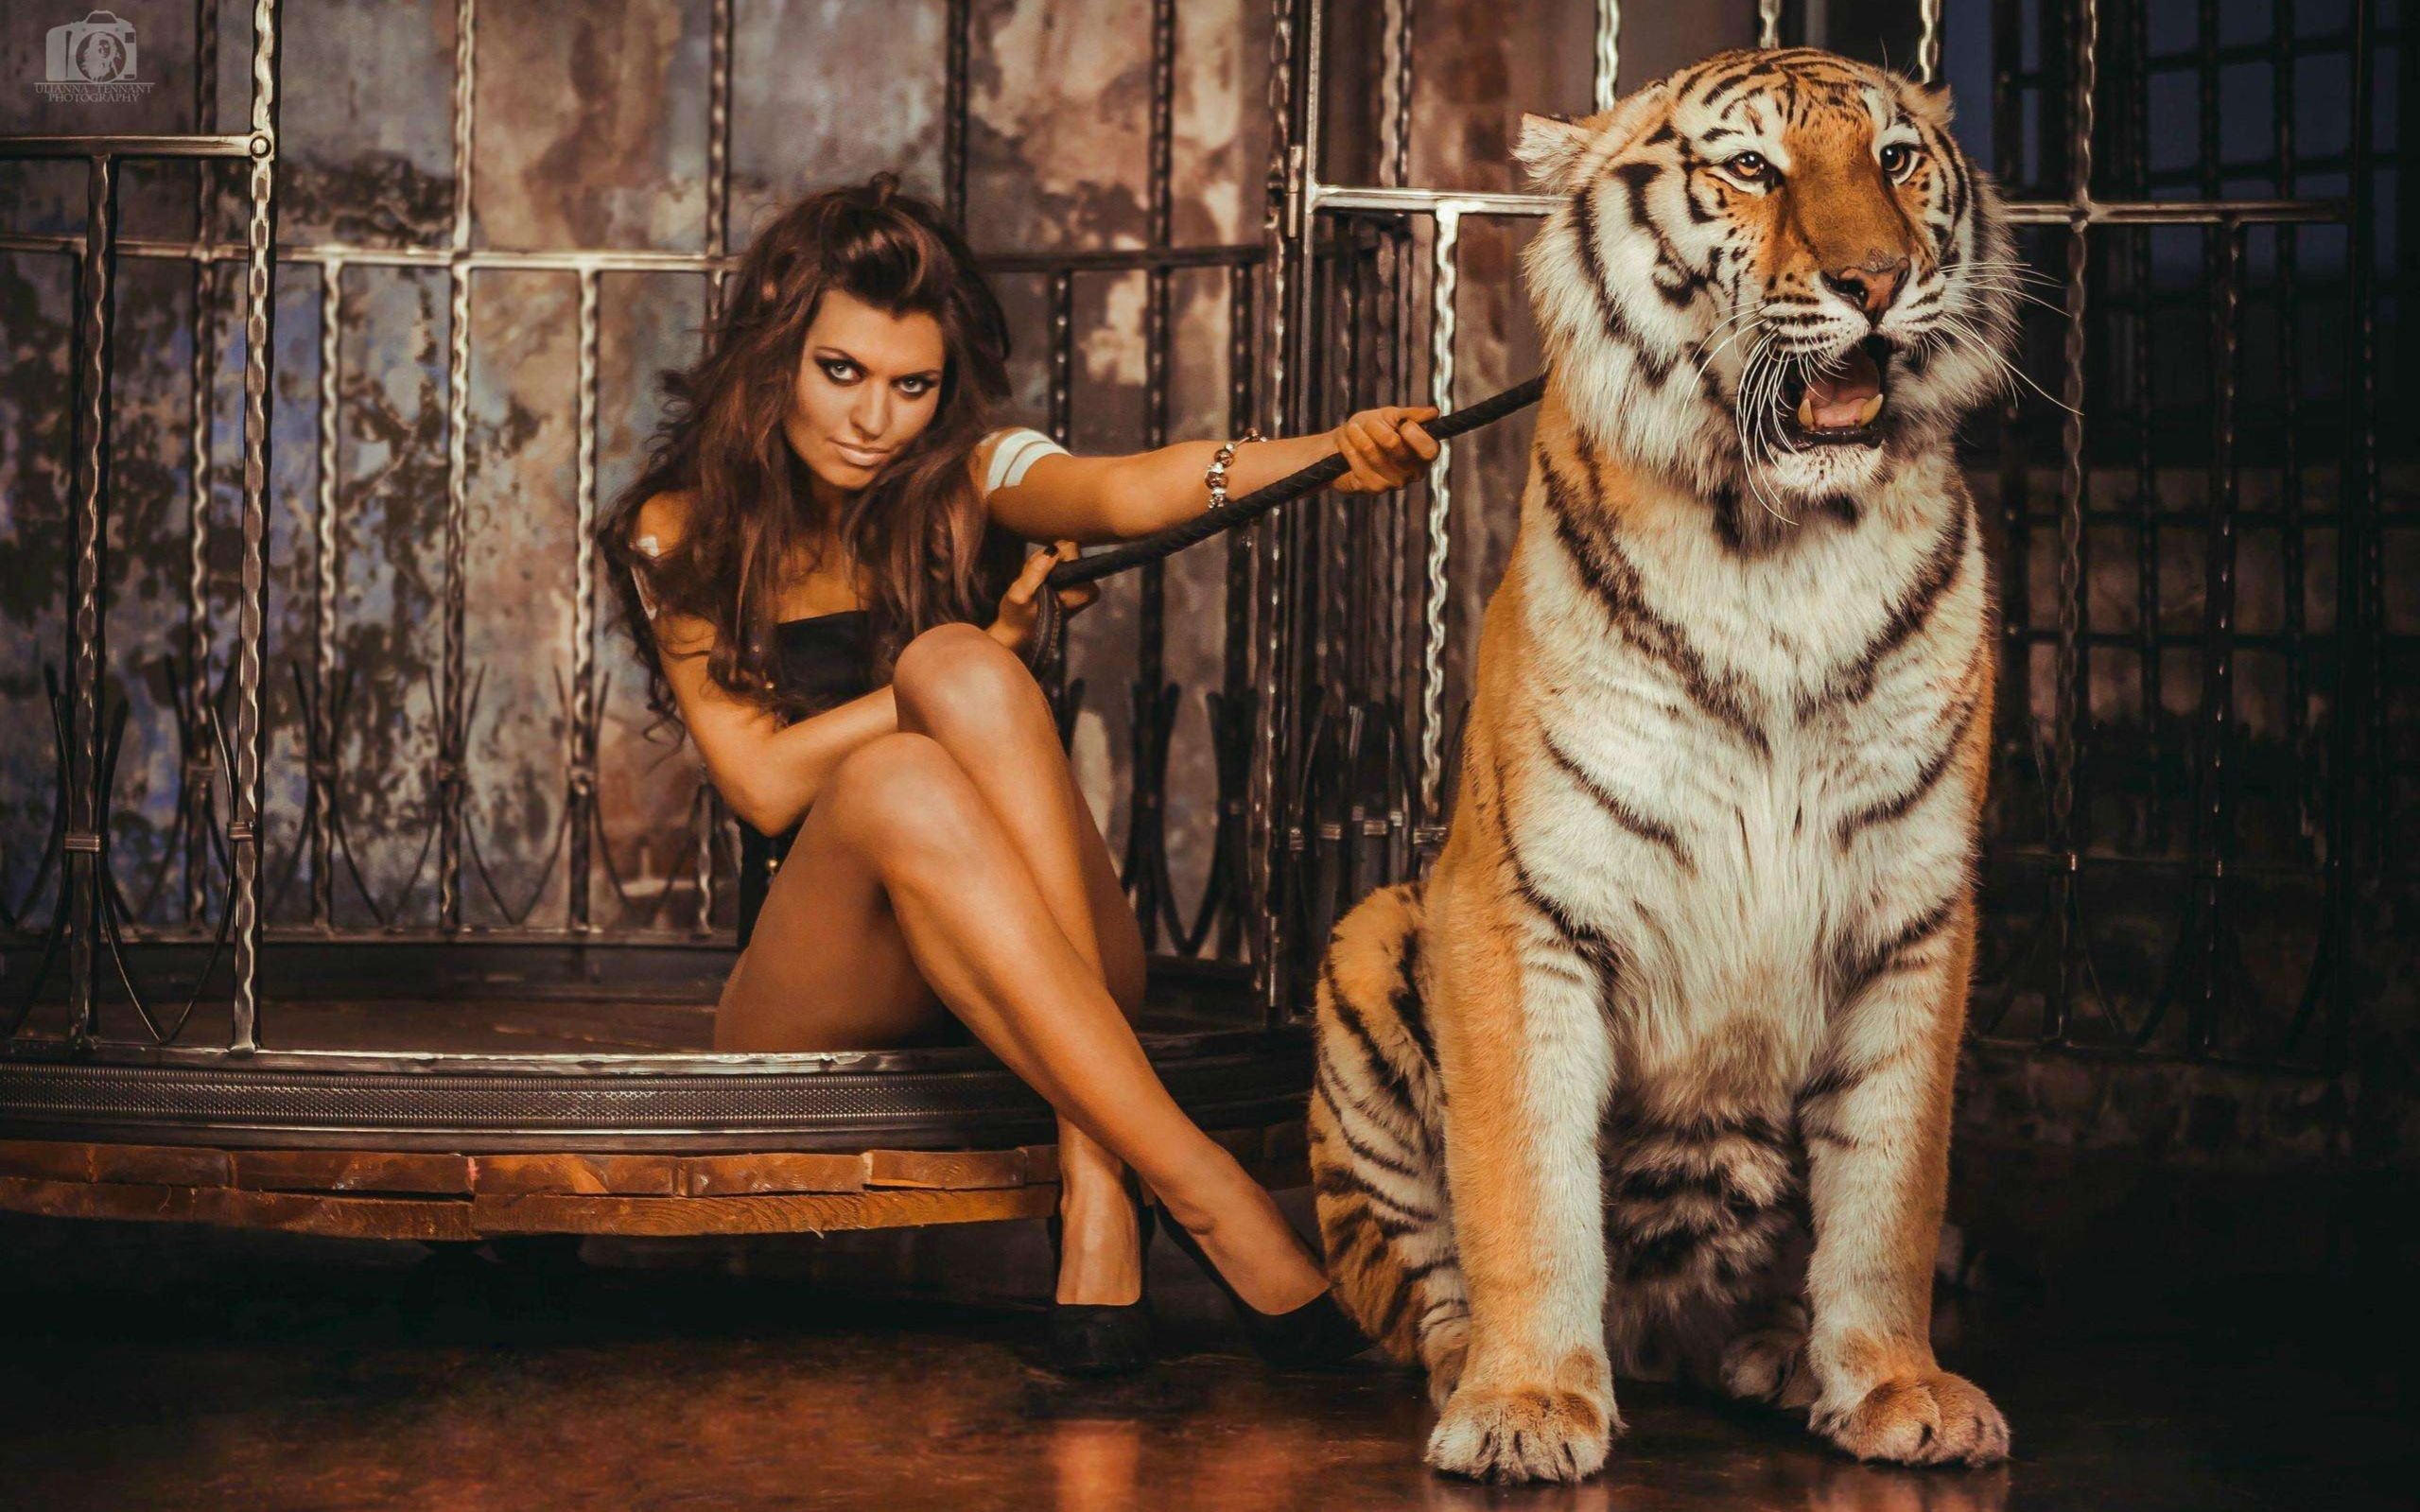 Велотигр. Фотосессия Сиенна Миллер с тигром.